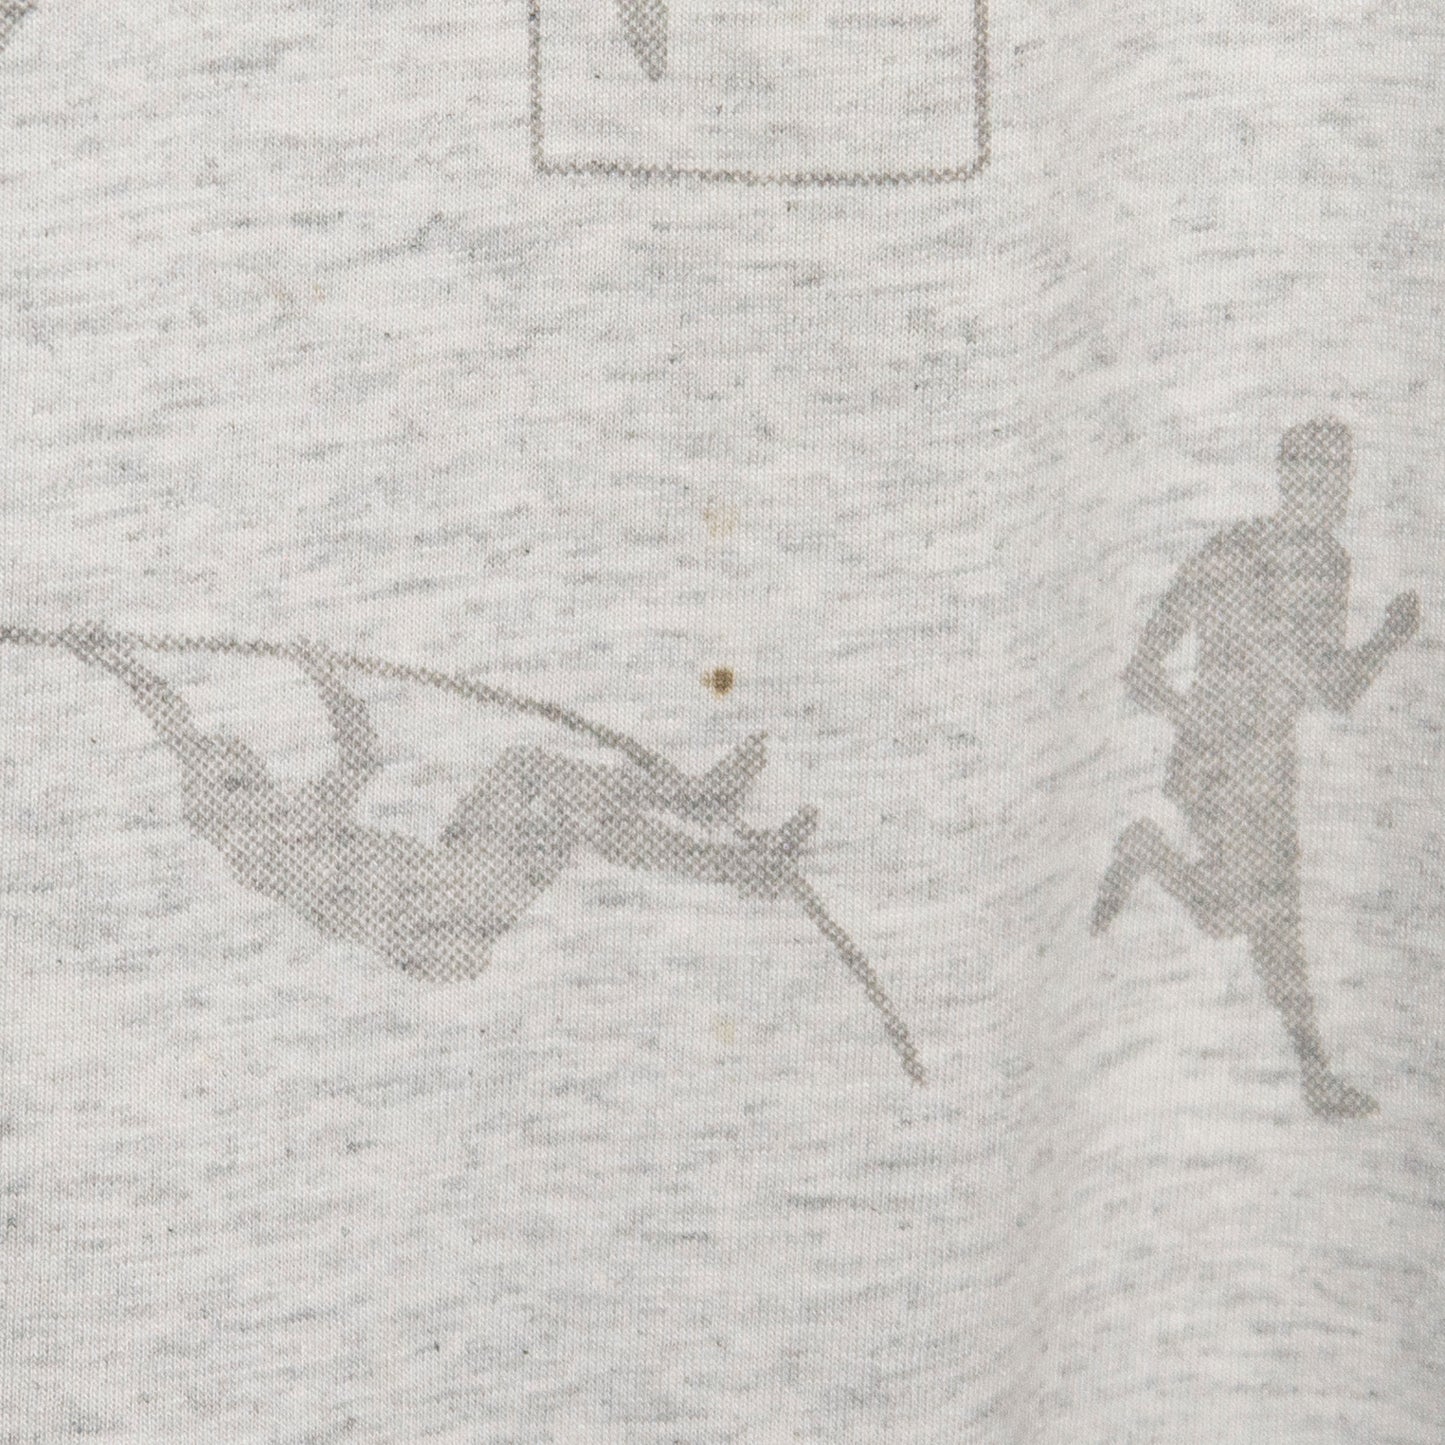 1992  USA Olympics Track & Field T-Shirt Medium